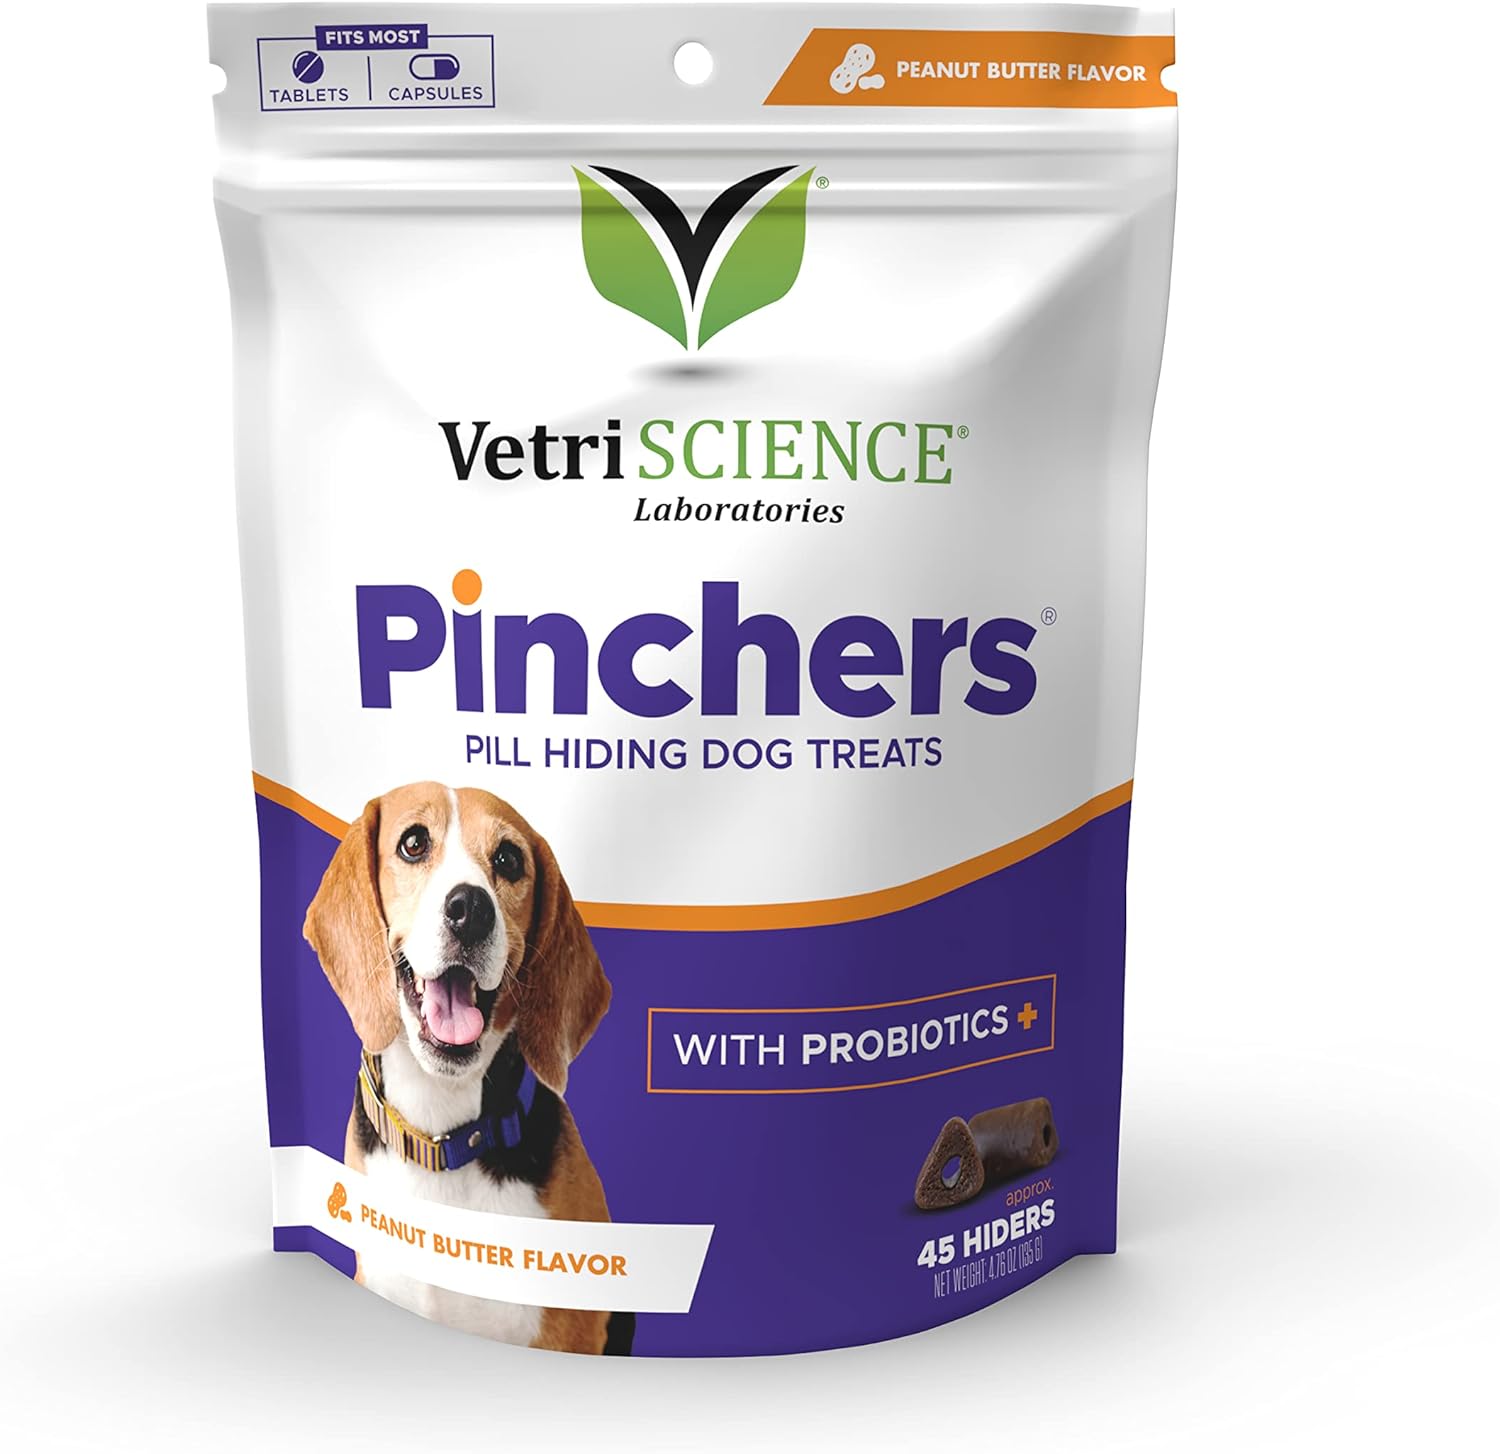 VETRISCIENCE Pinchers, Pill Hiding Dog Treats, Peanut Butter Flavor, 45 Hiders (2 Pack)